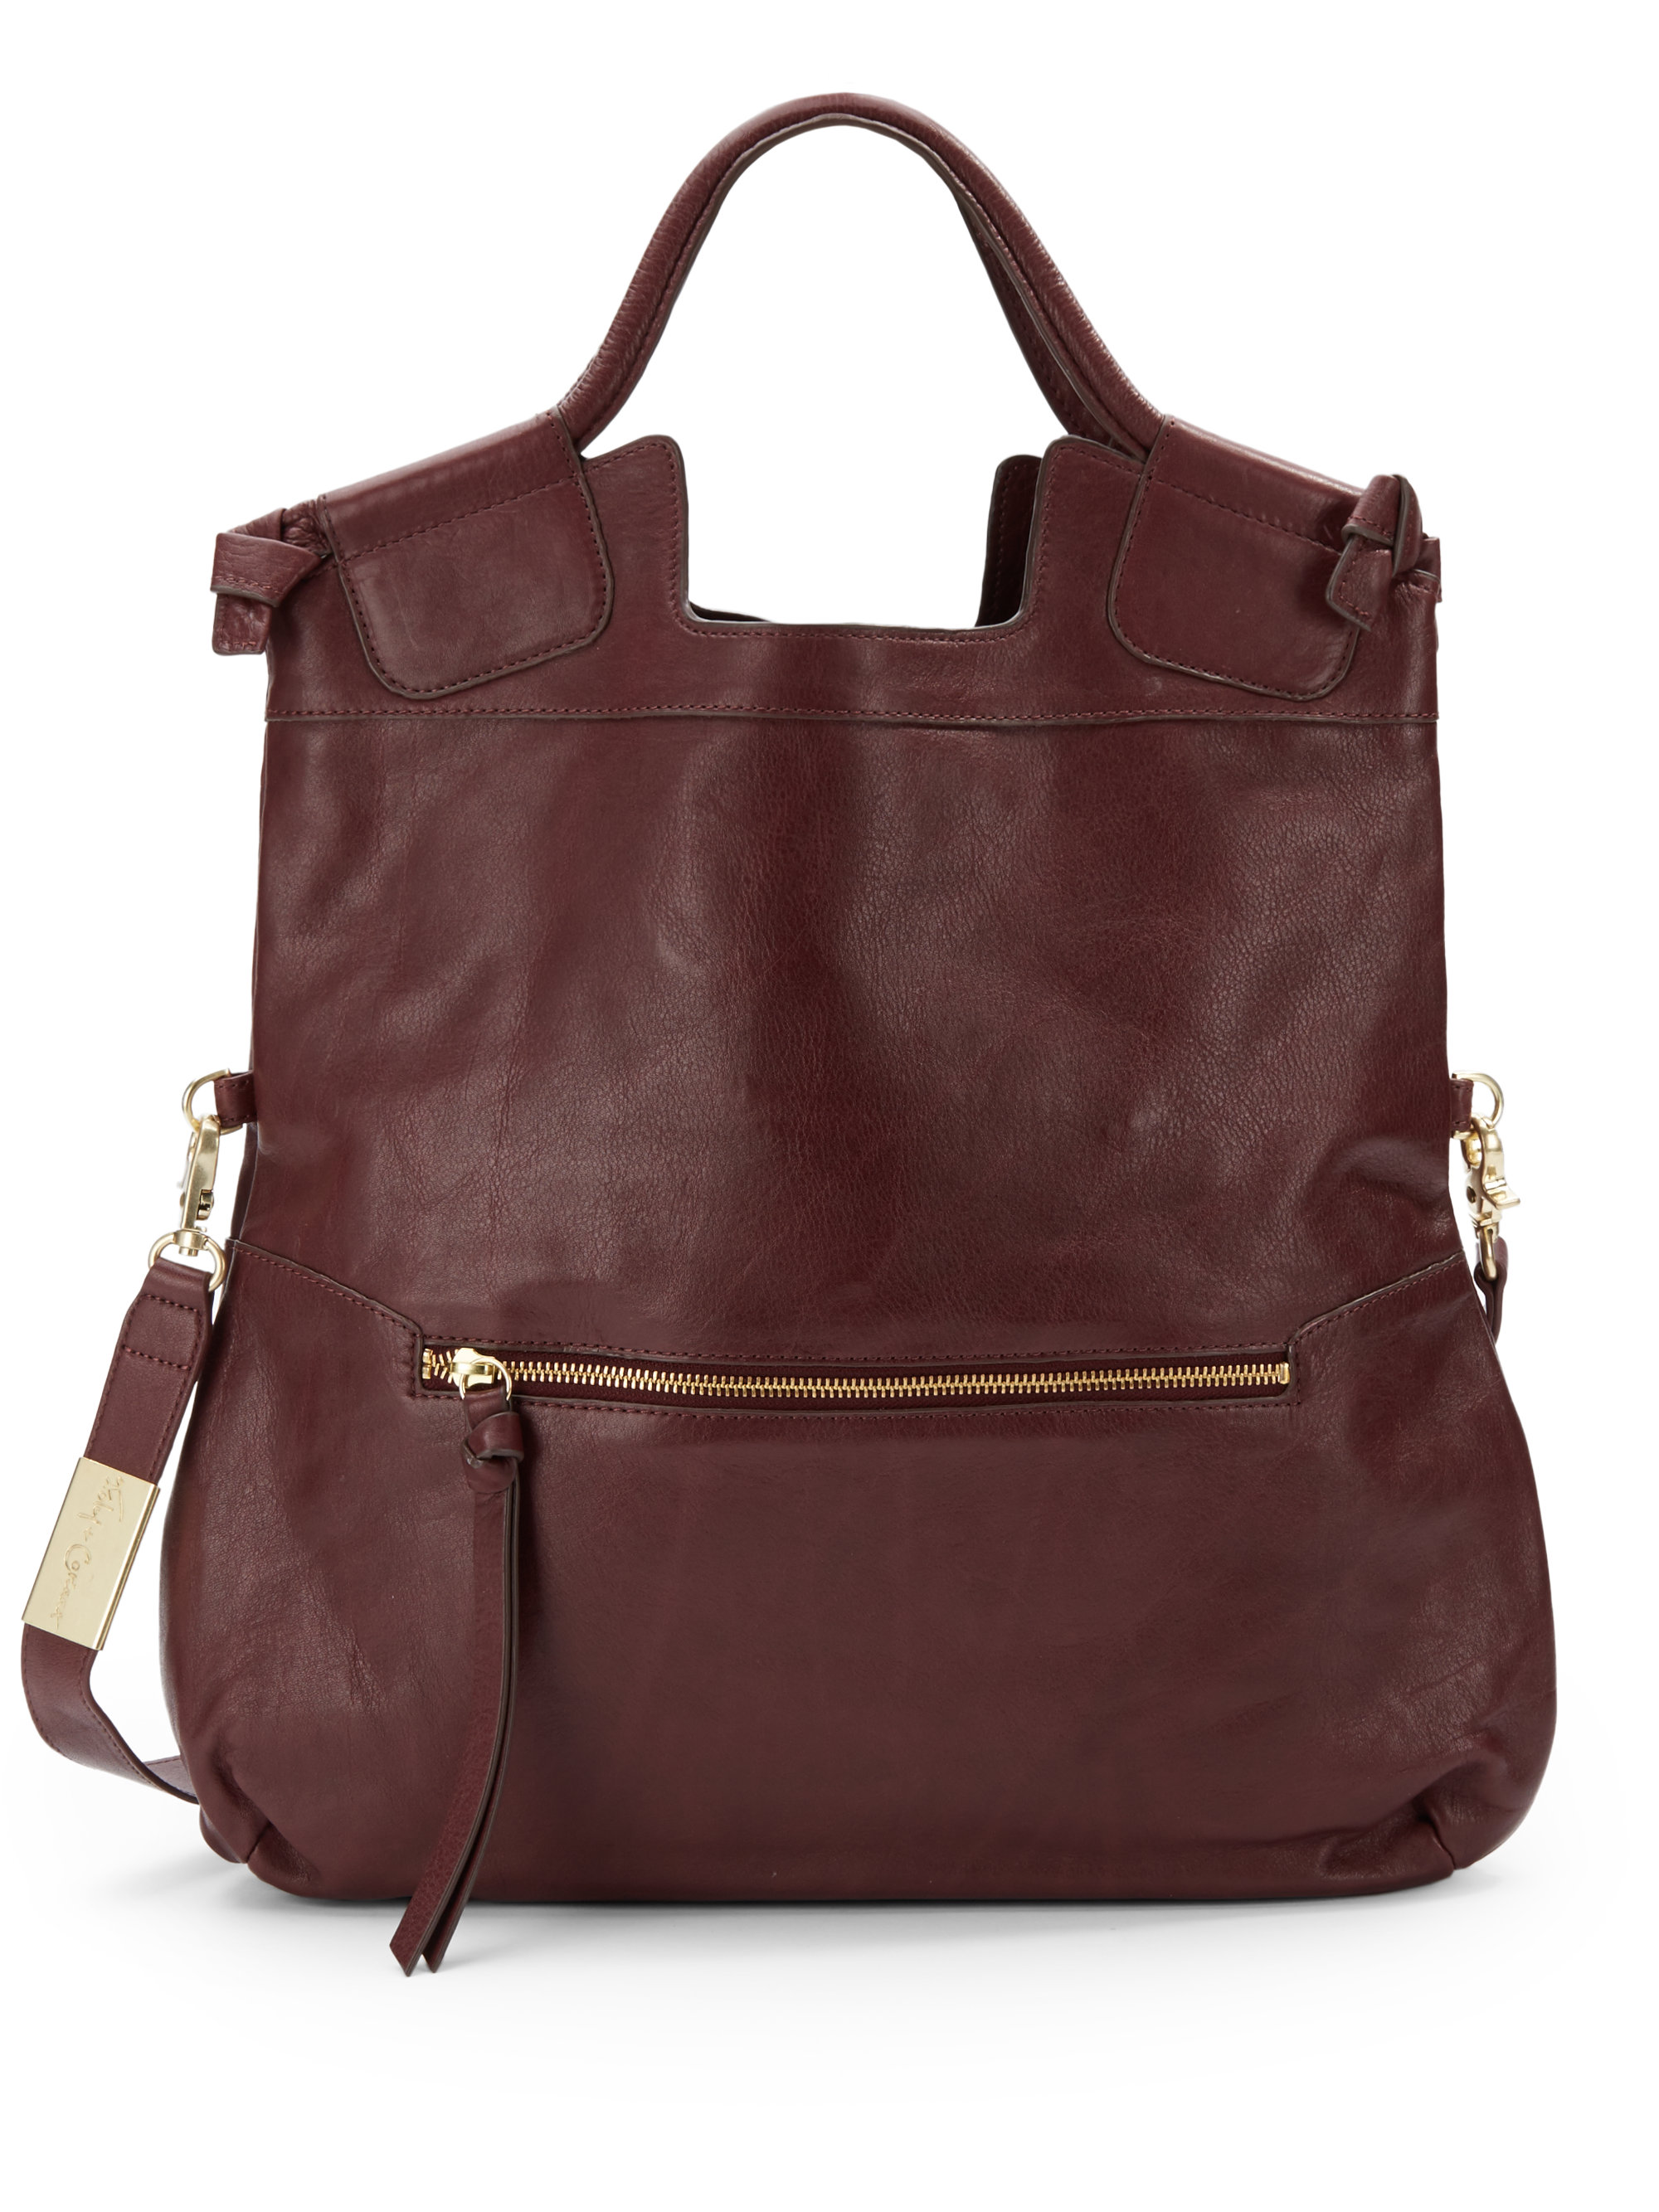 Foley + corinna Mid City Leather Convertible Foldover Handbag in Purple ...